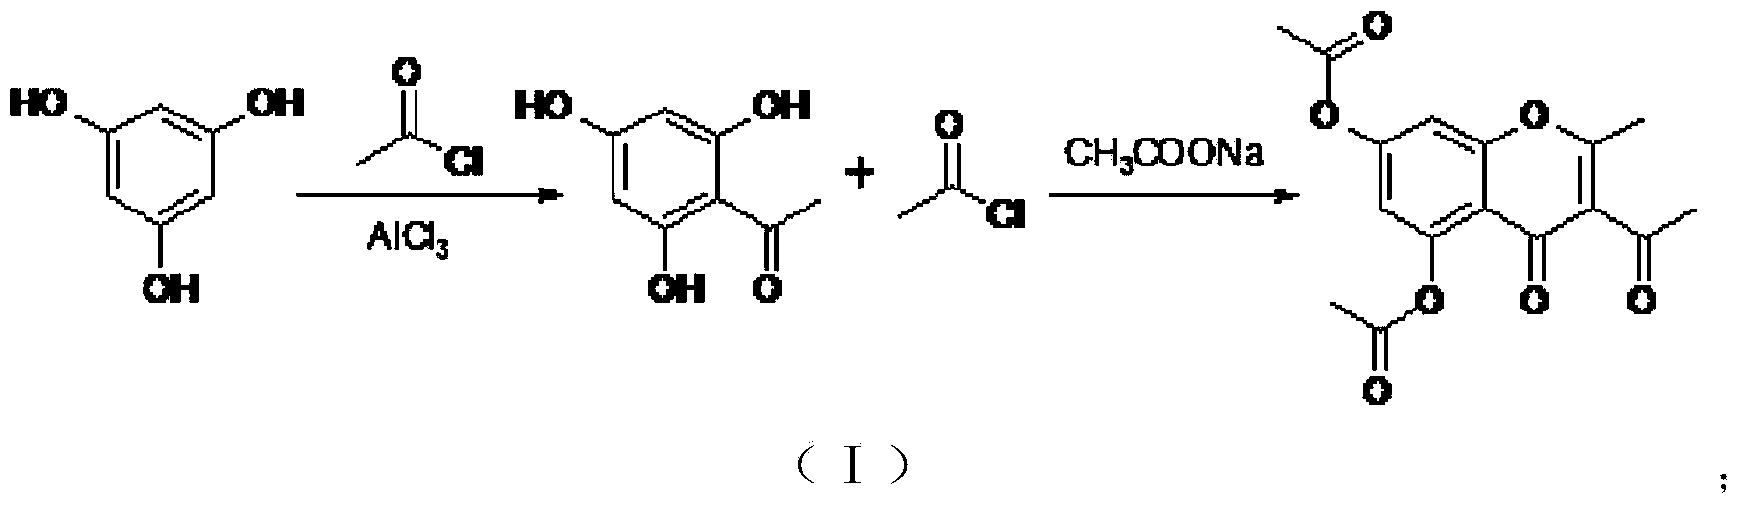 Chemical preparation method of compound 2-methyl-5,7-dihydroxy chromone